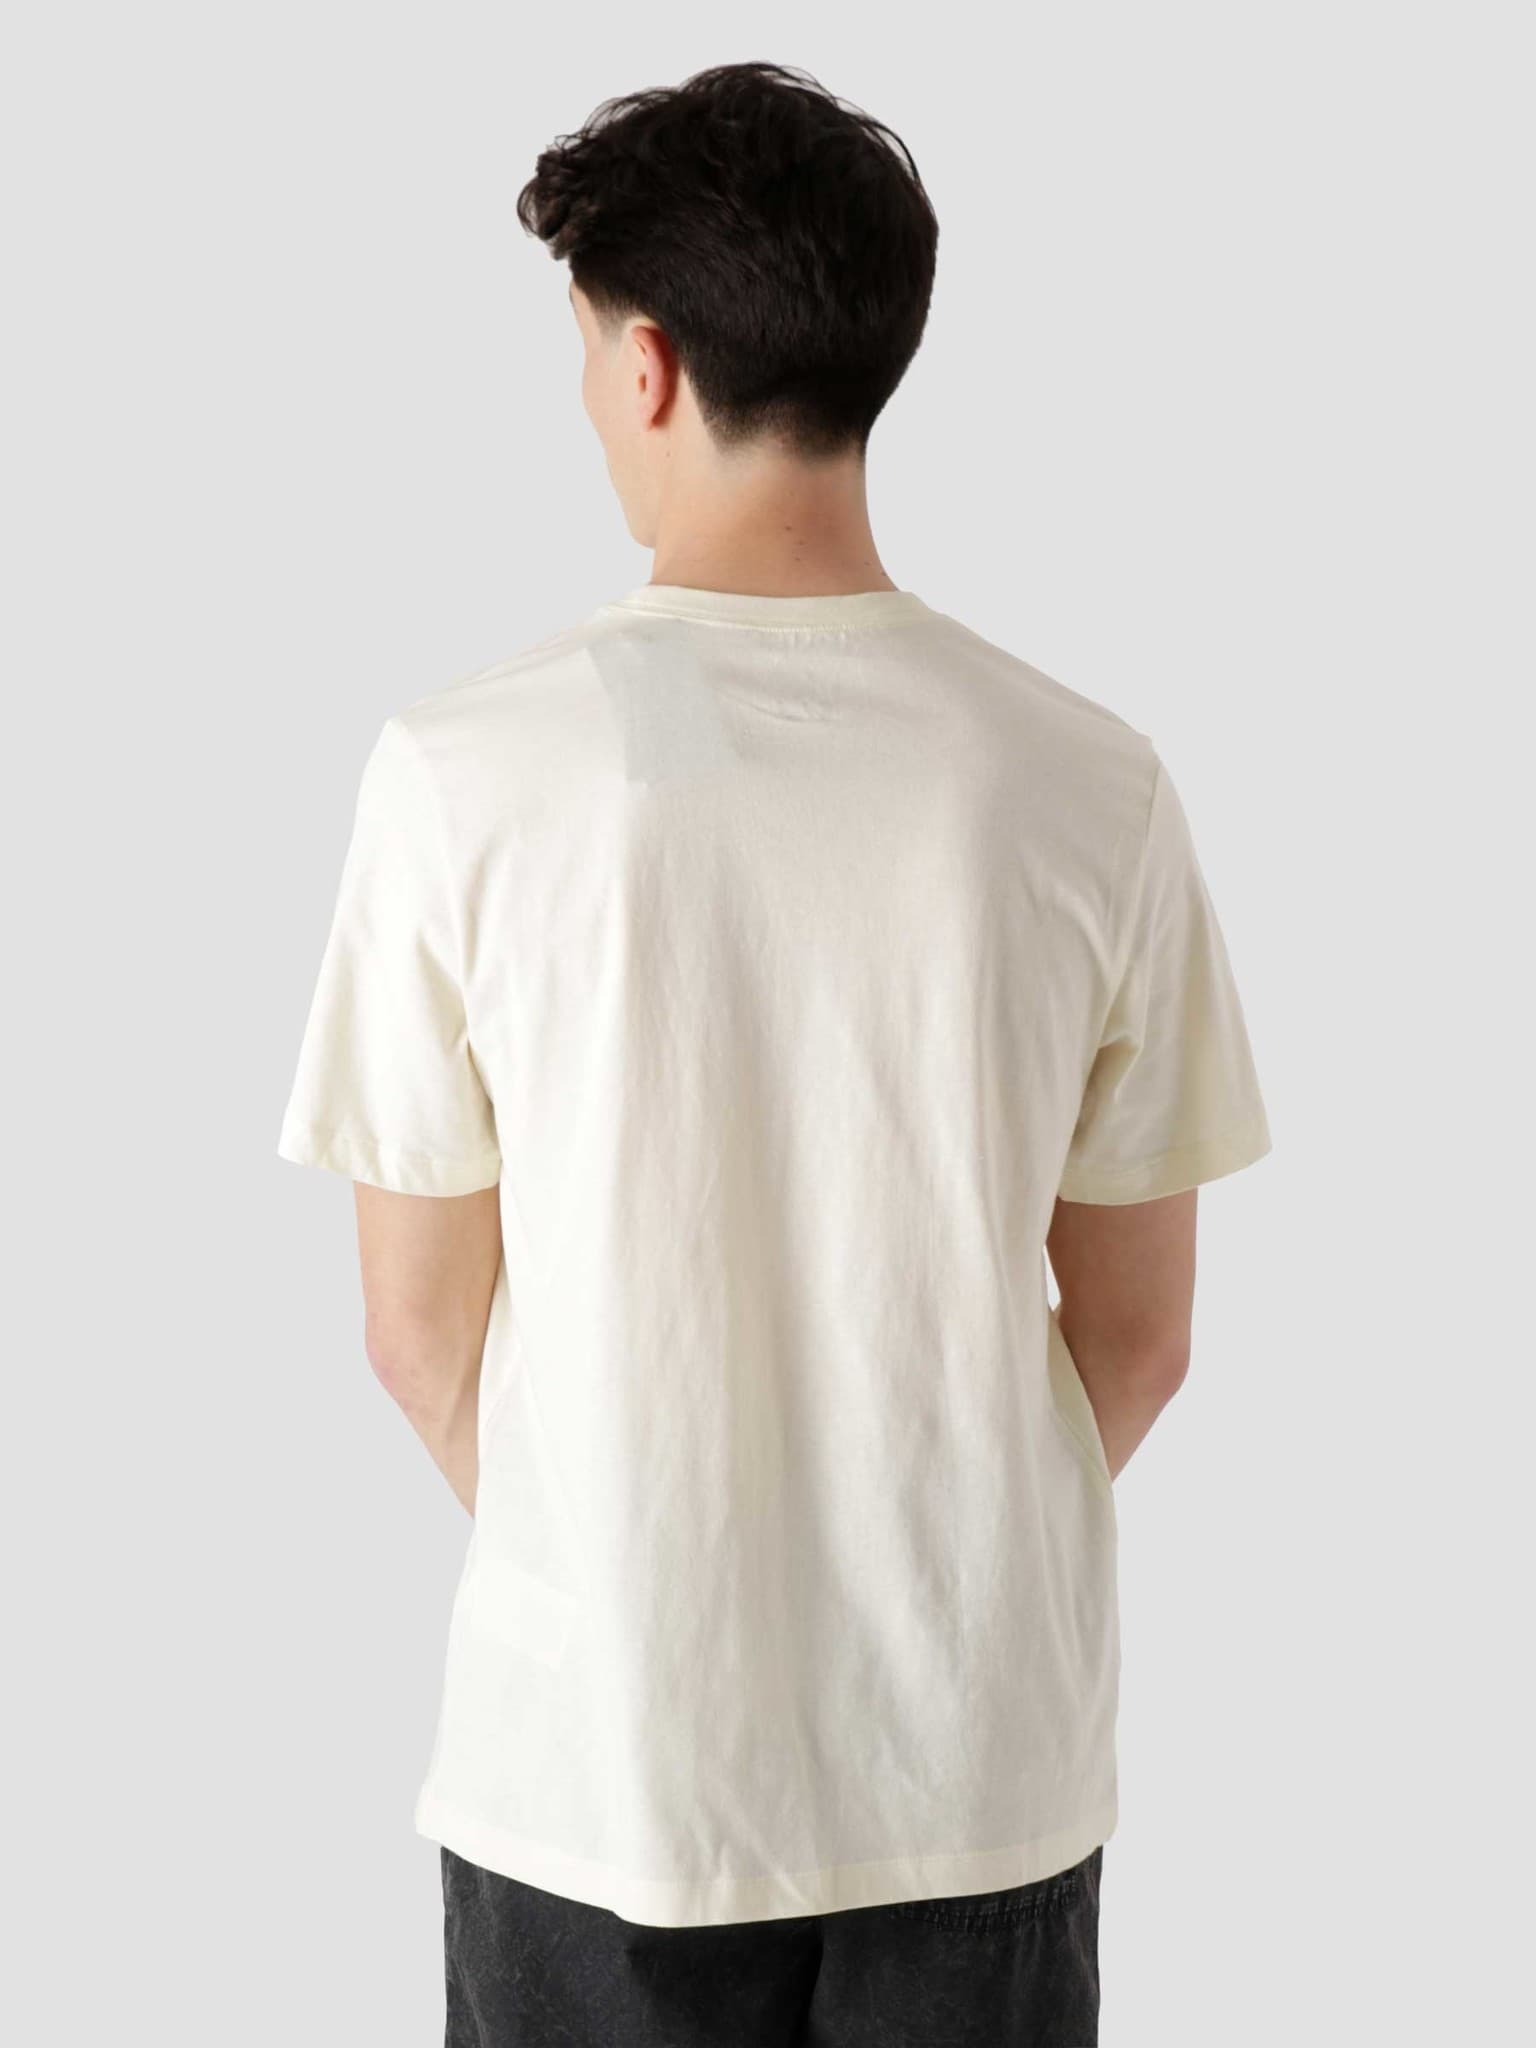 Nsw Club T-Shirt Coconut Milk White AR4997-113